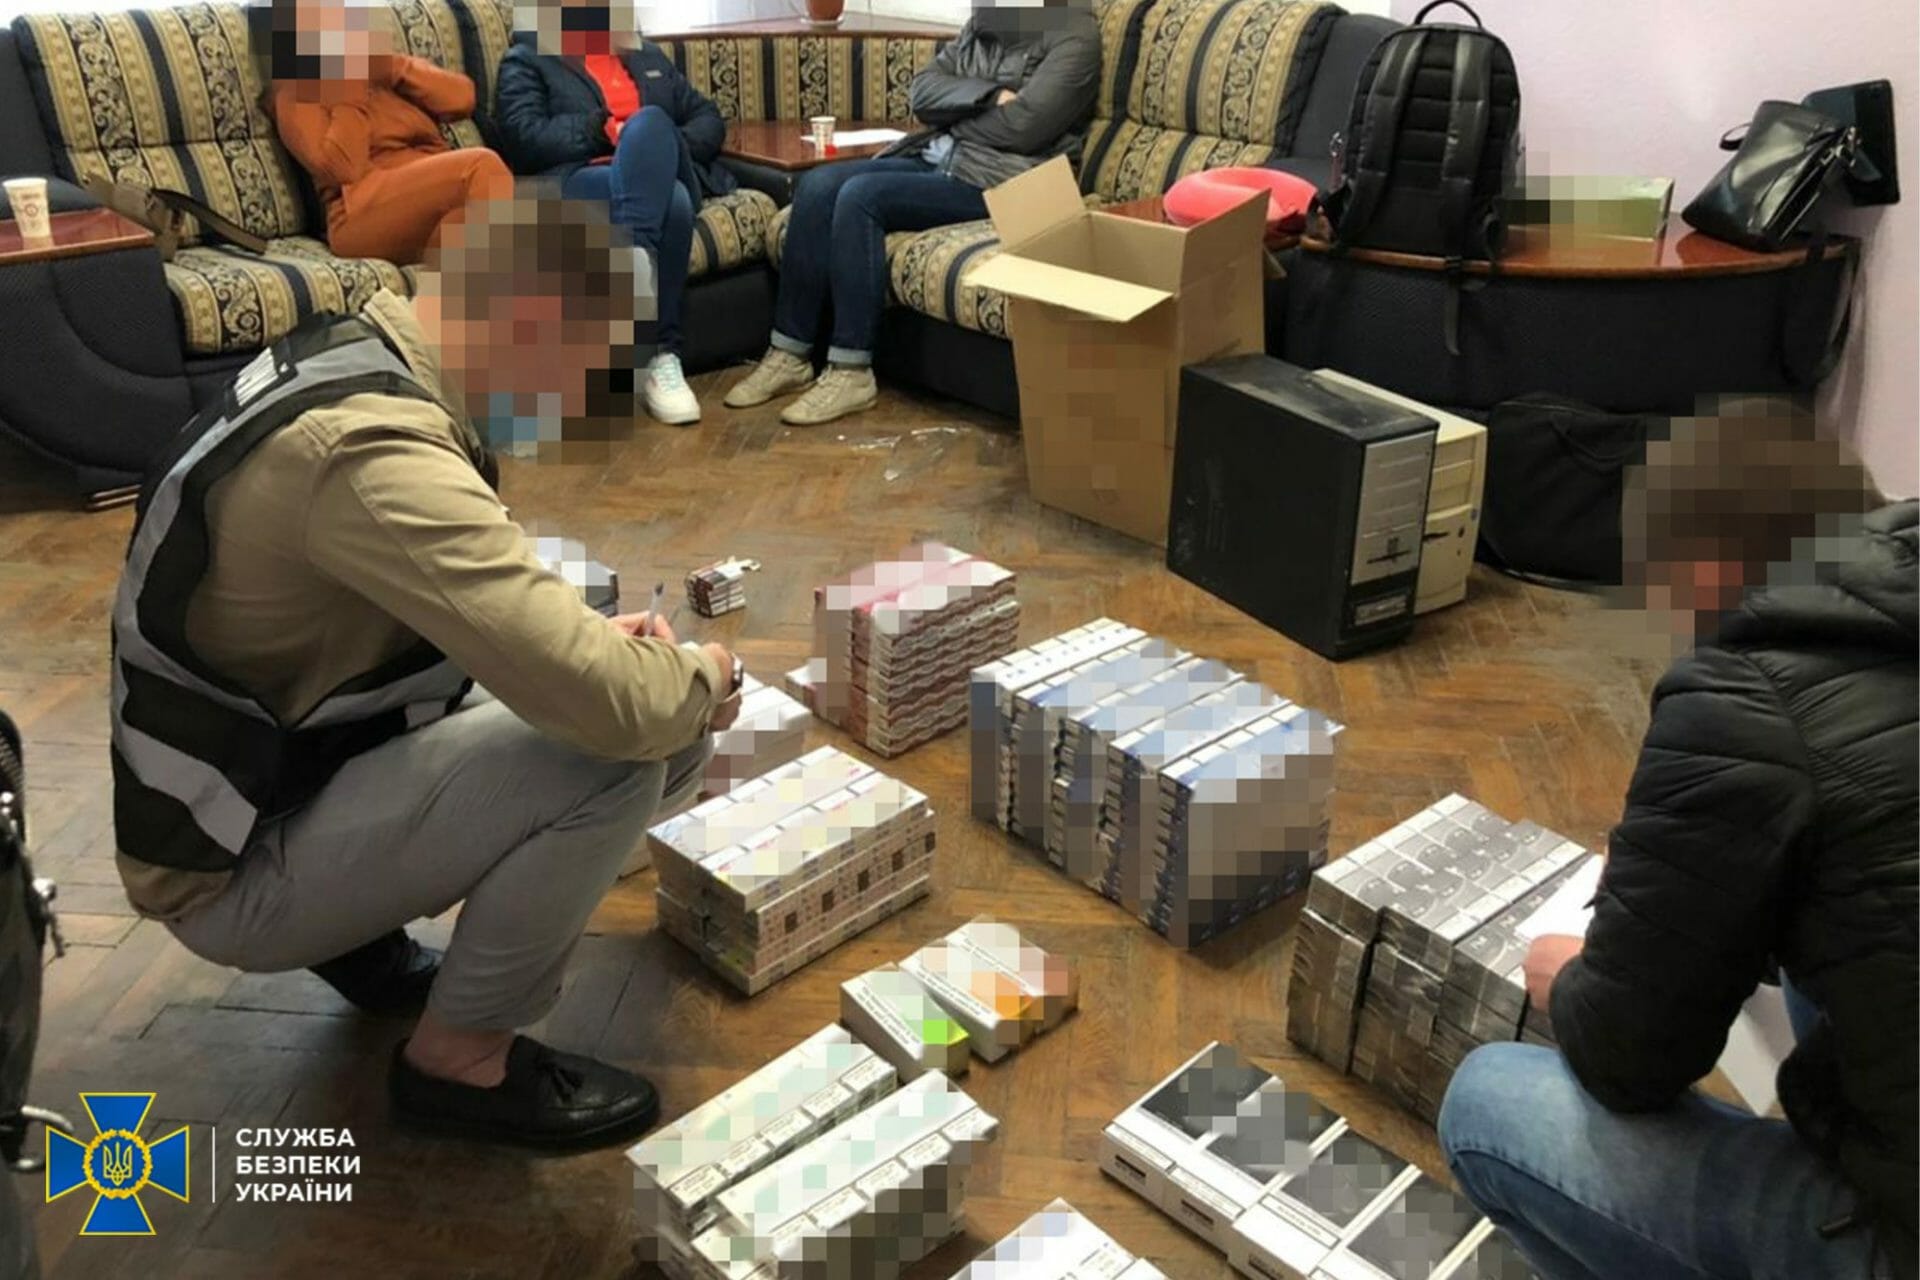 Фото контрафакт и контрабанда сигарет в Украине